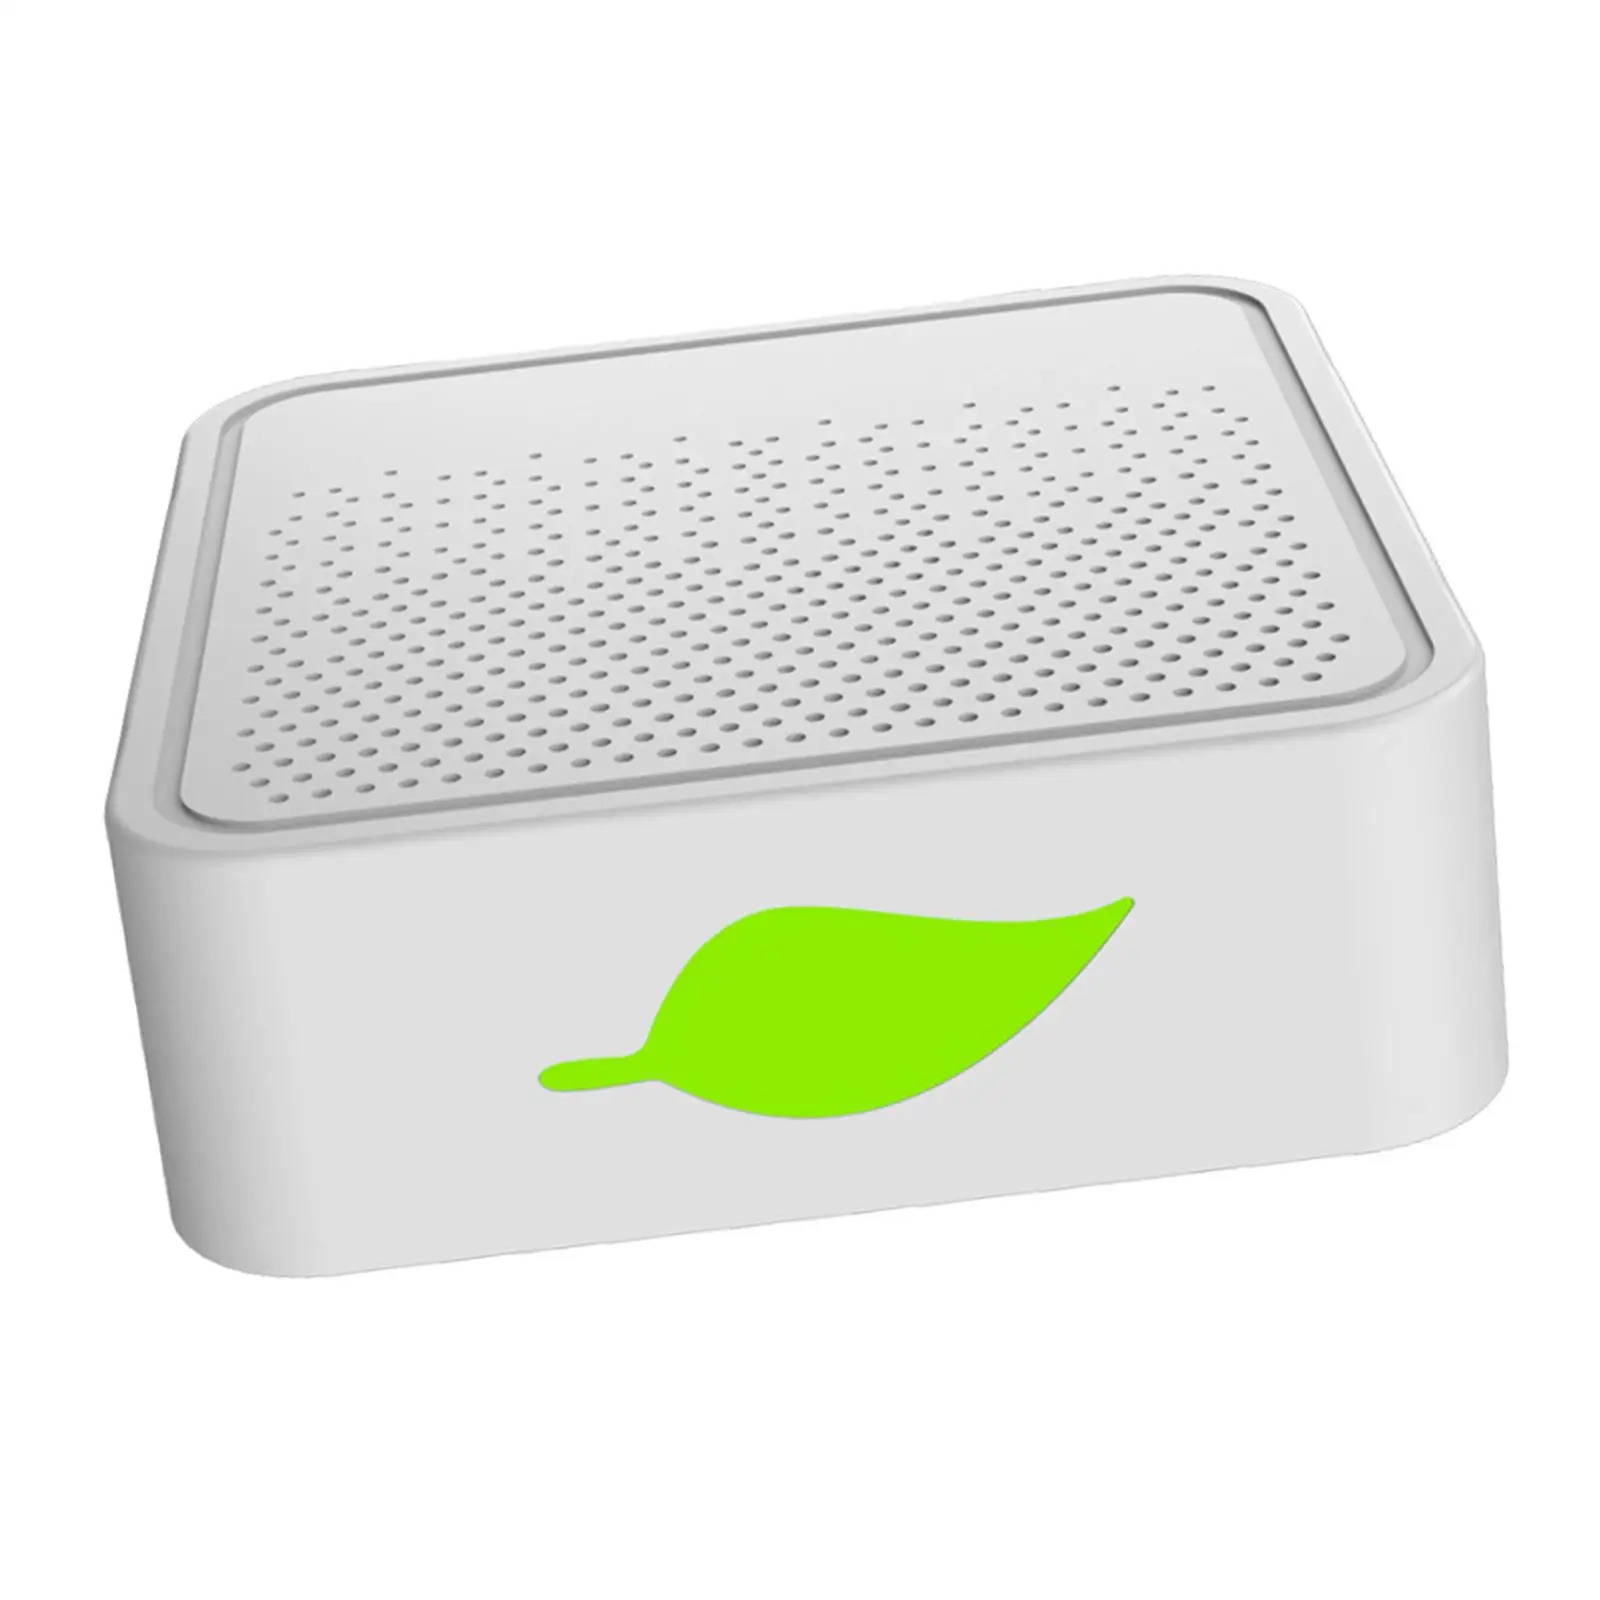 Mini Ozone Air Purifier Deodorization USB Recharging for Refrigerators, Automobiles